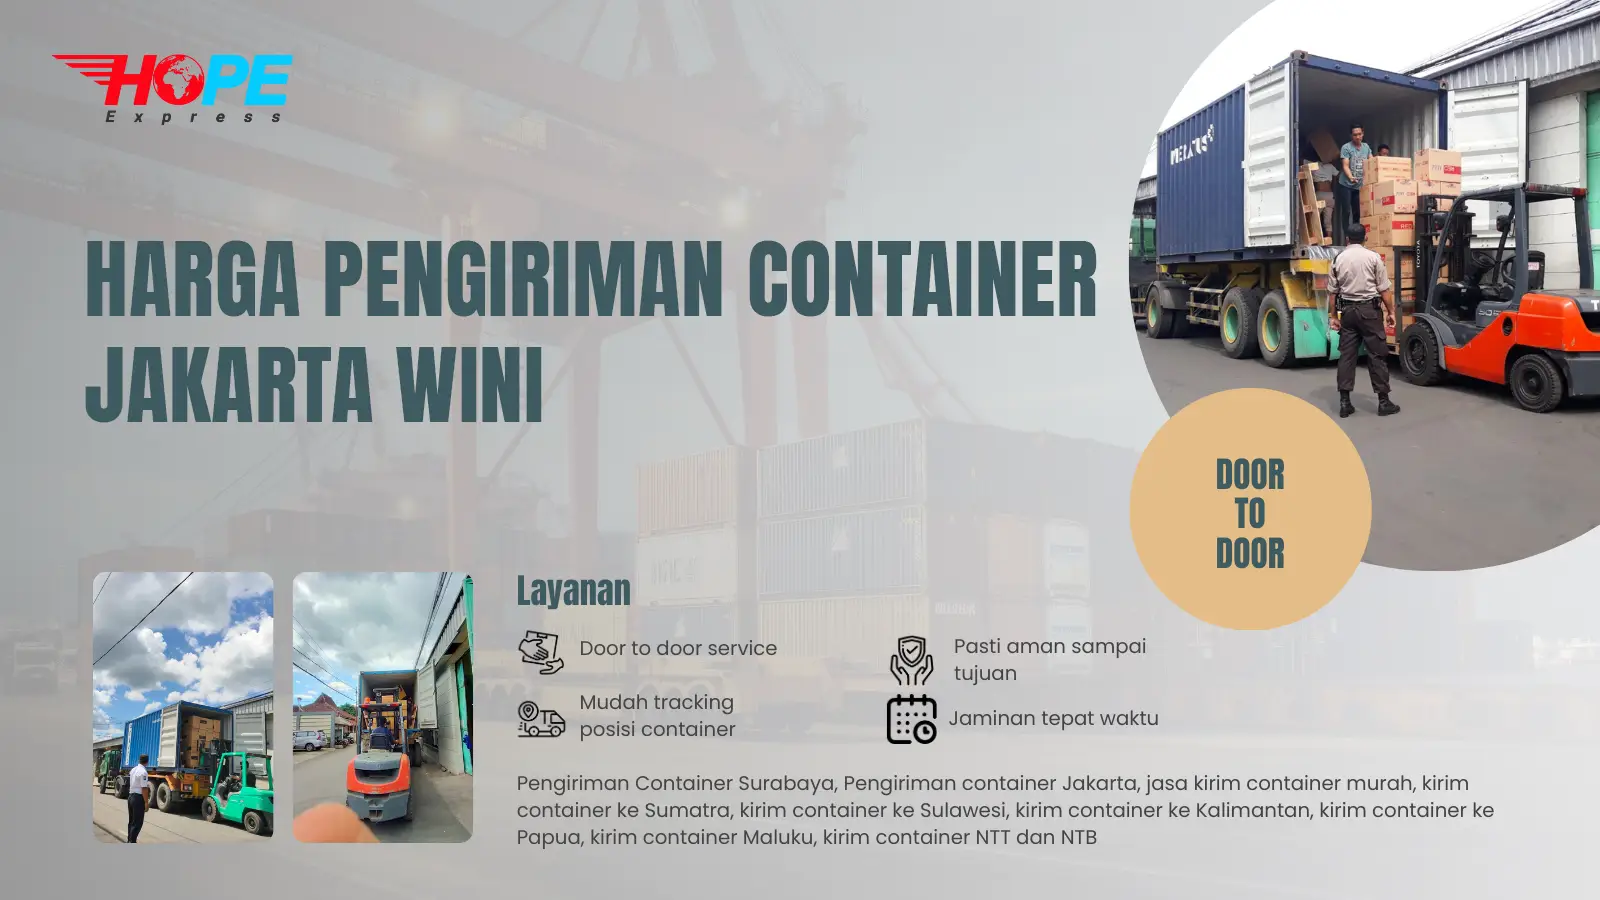 Harga Pengiriman Container Jakarta Wini